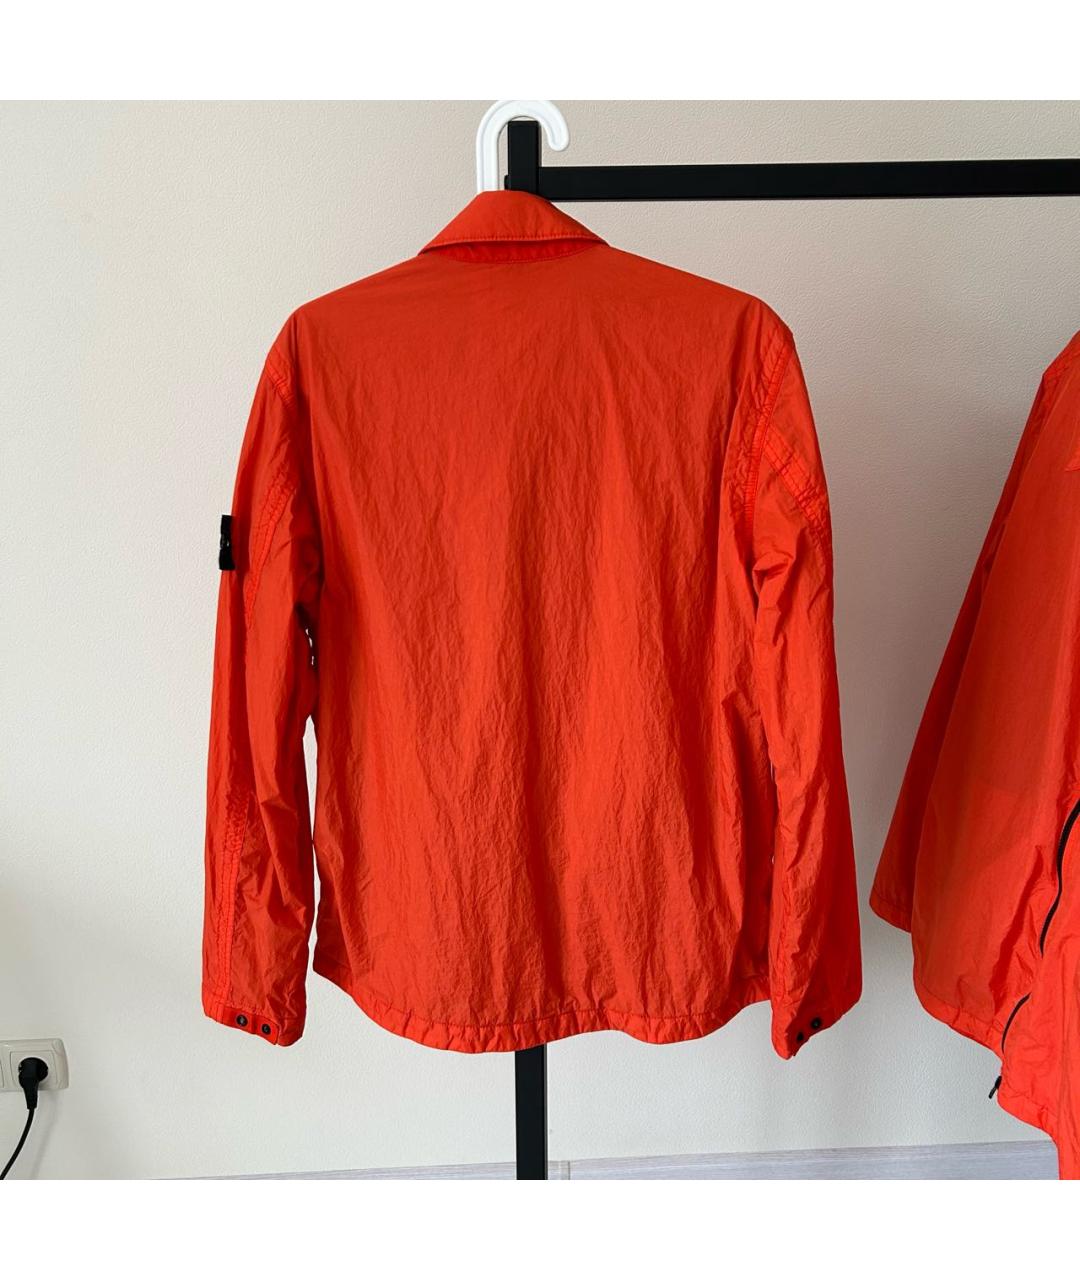 STONE ISLAND Оранжевая полиэстеровая куртка, фото 2